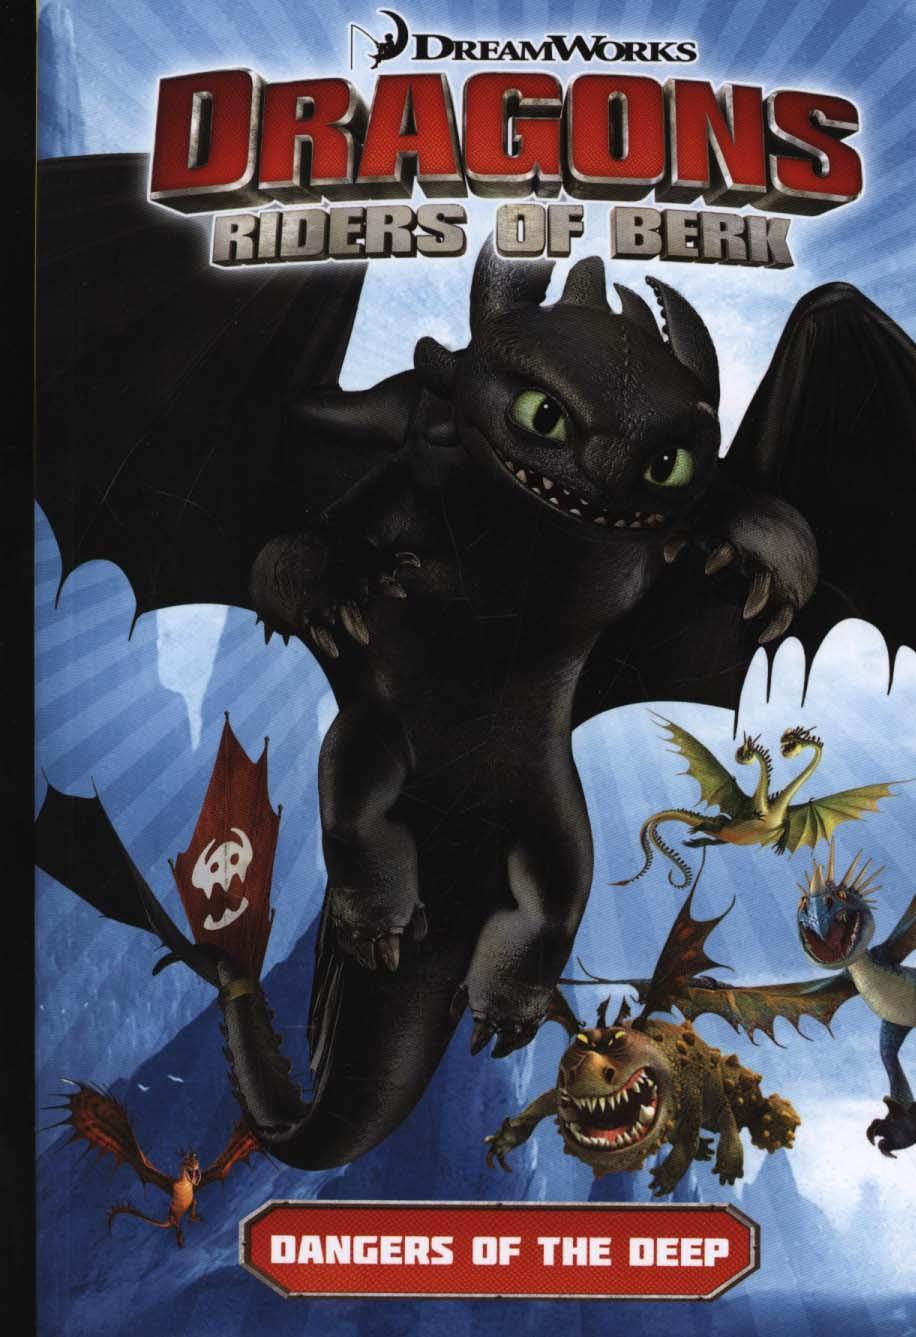 DreamWorks' Dragons -  